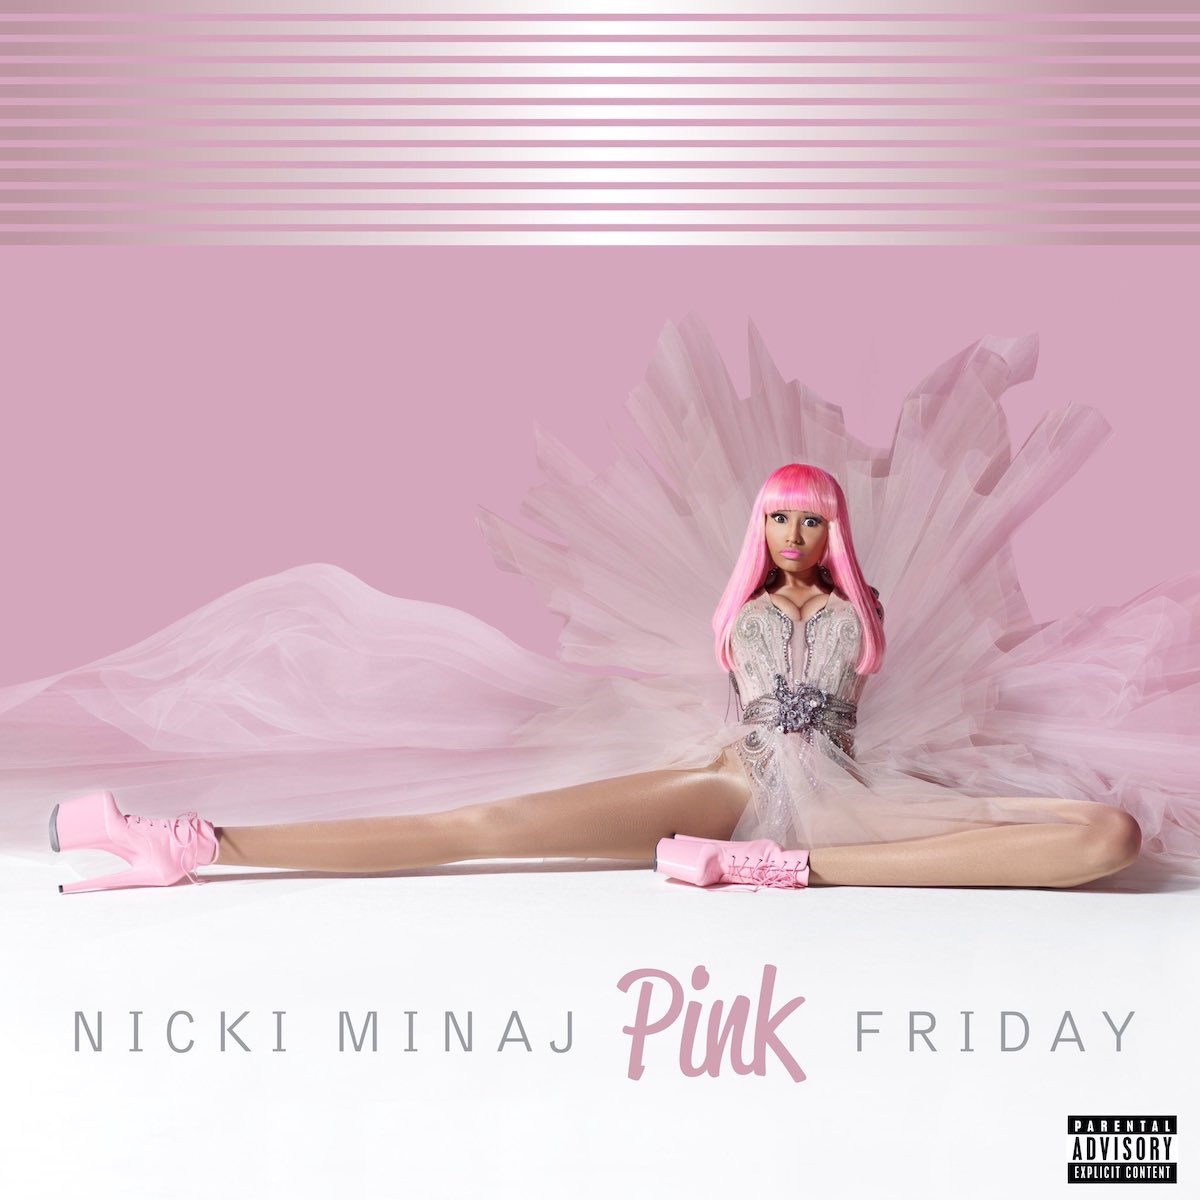 nicki minaj pink friday complete edition Nicki Minaj Celebrates Pink Friday with 10th Anniversary Deluxe Edition: Stream